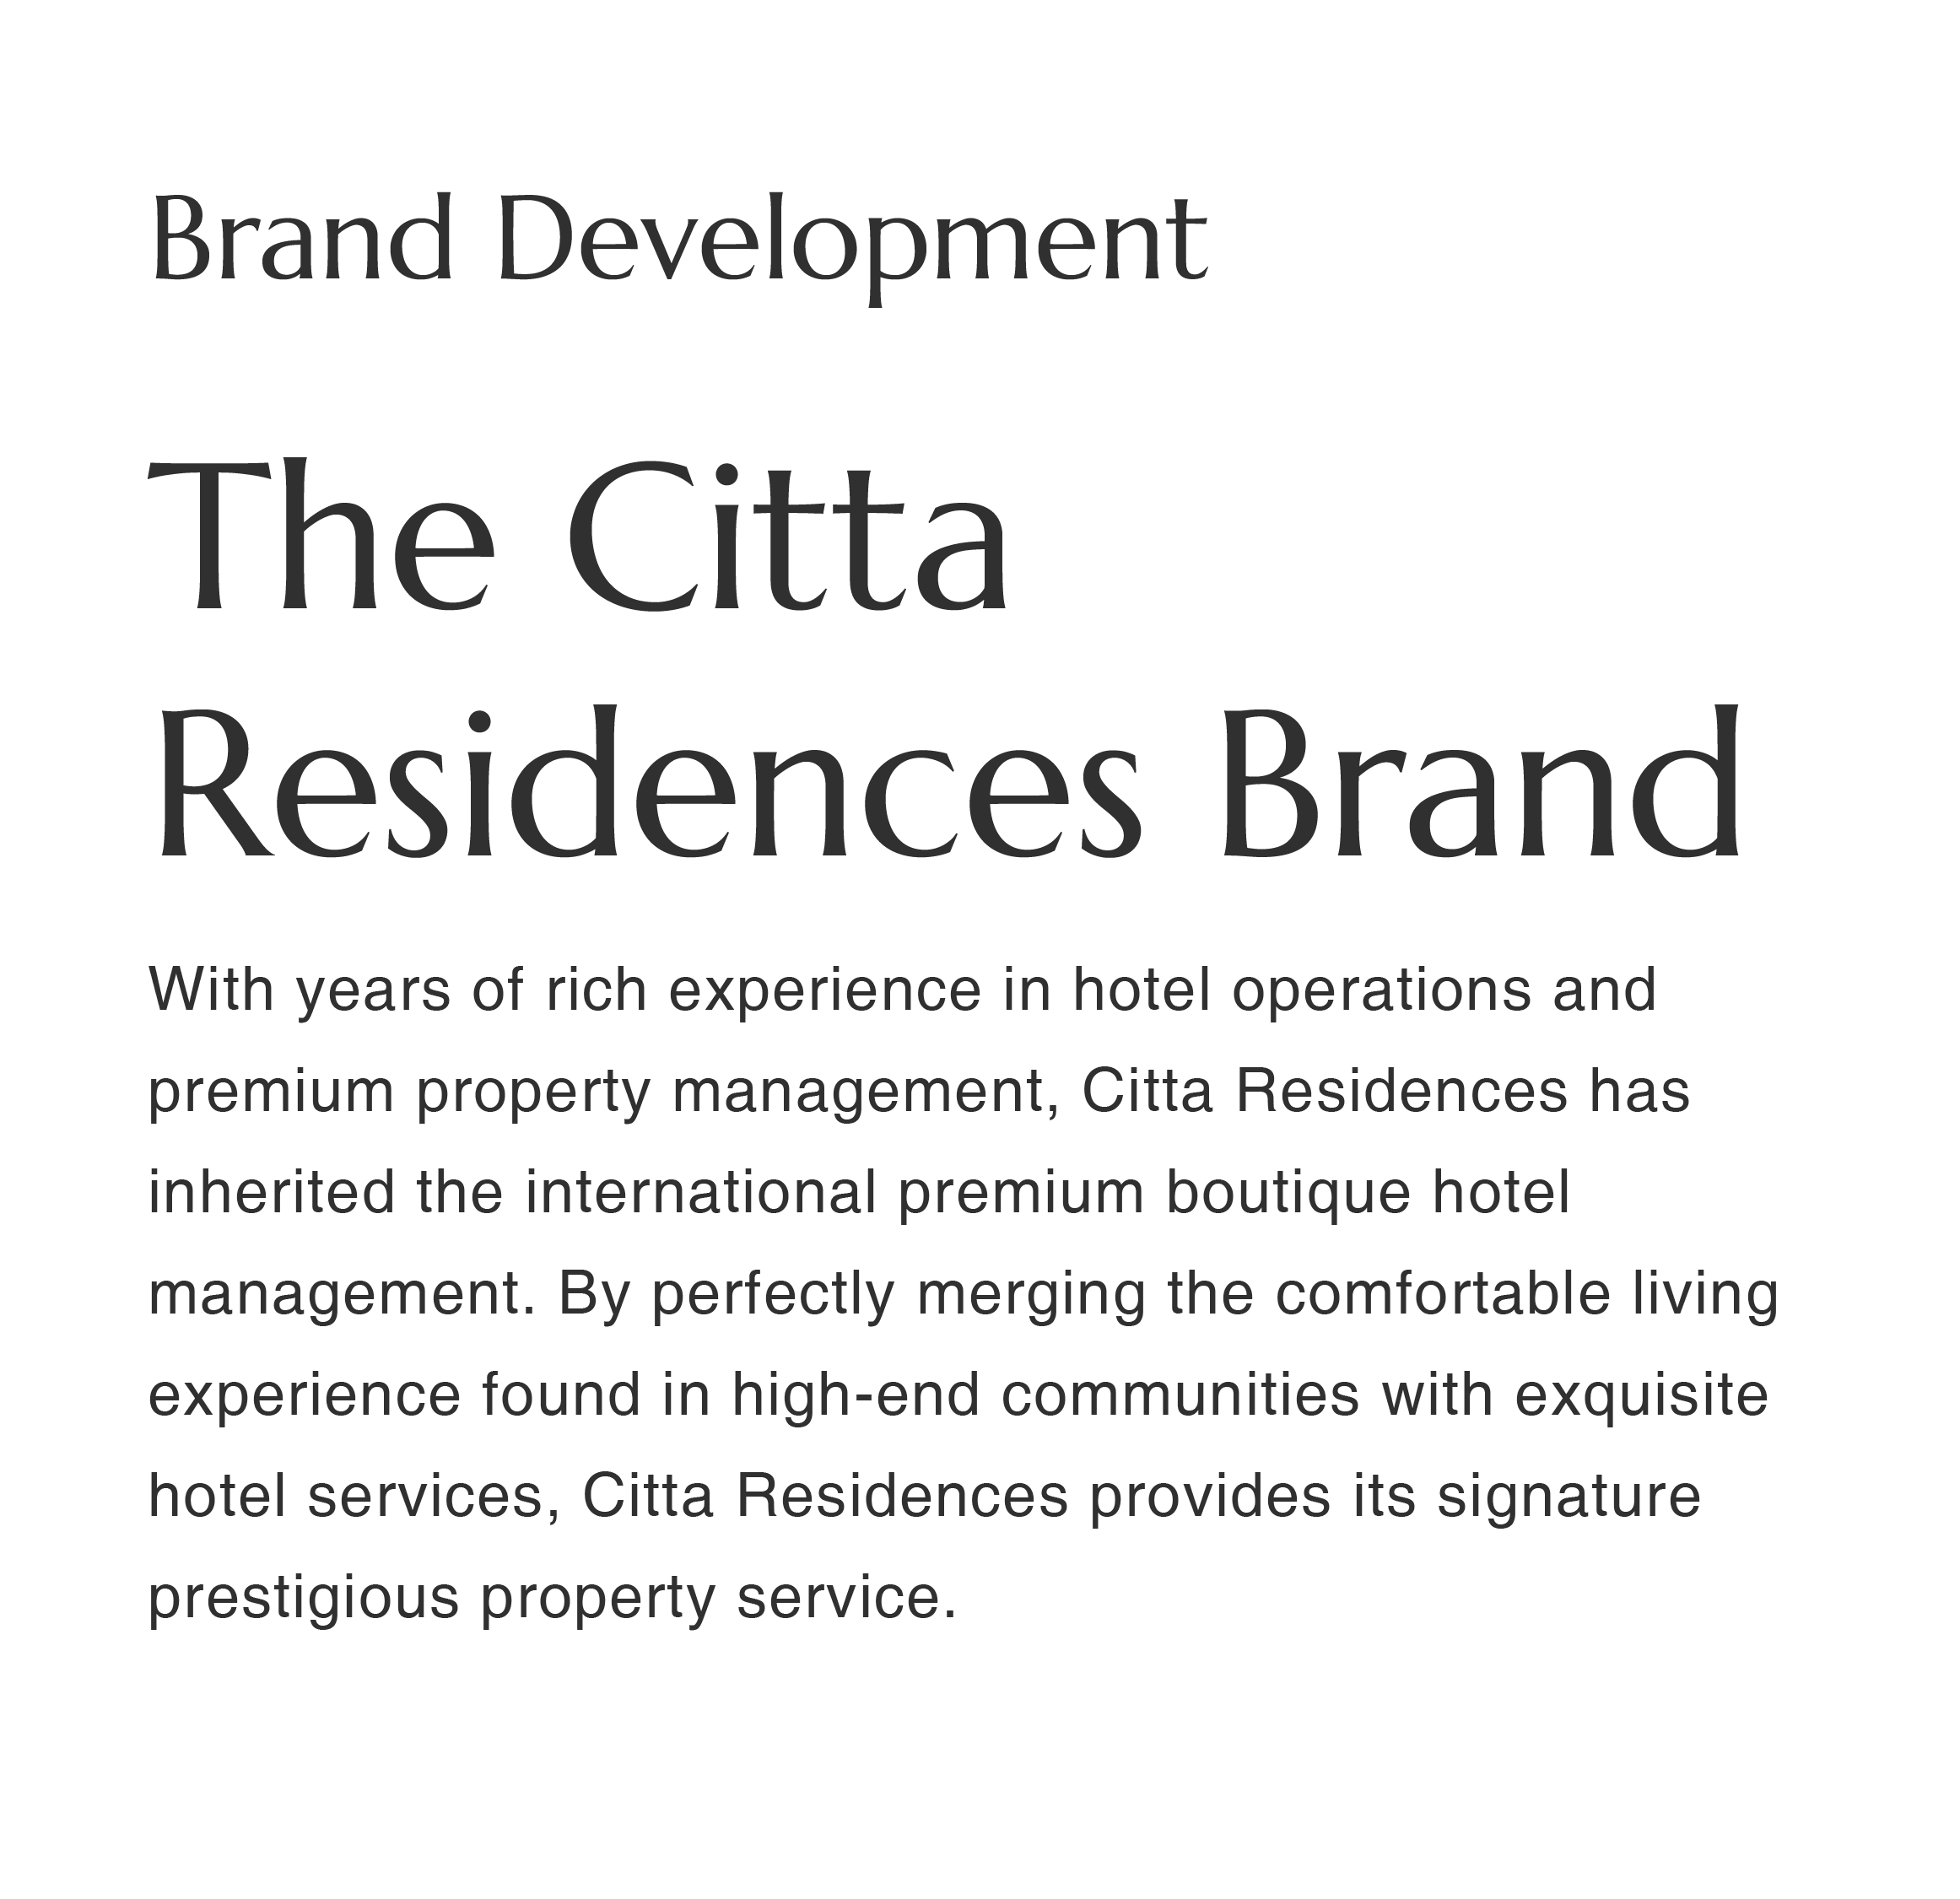 Brand Development The Citta Residences Brand